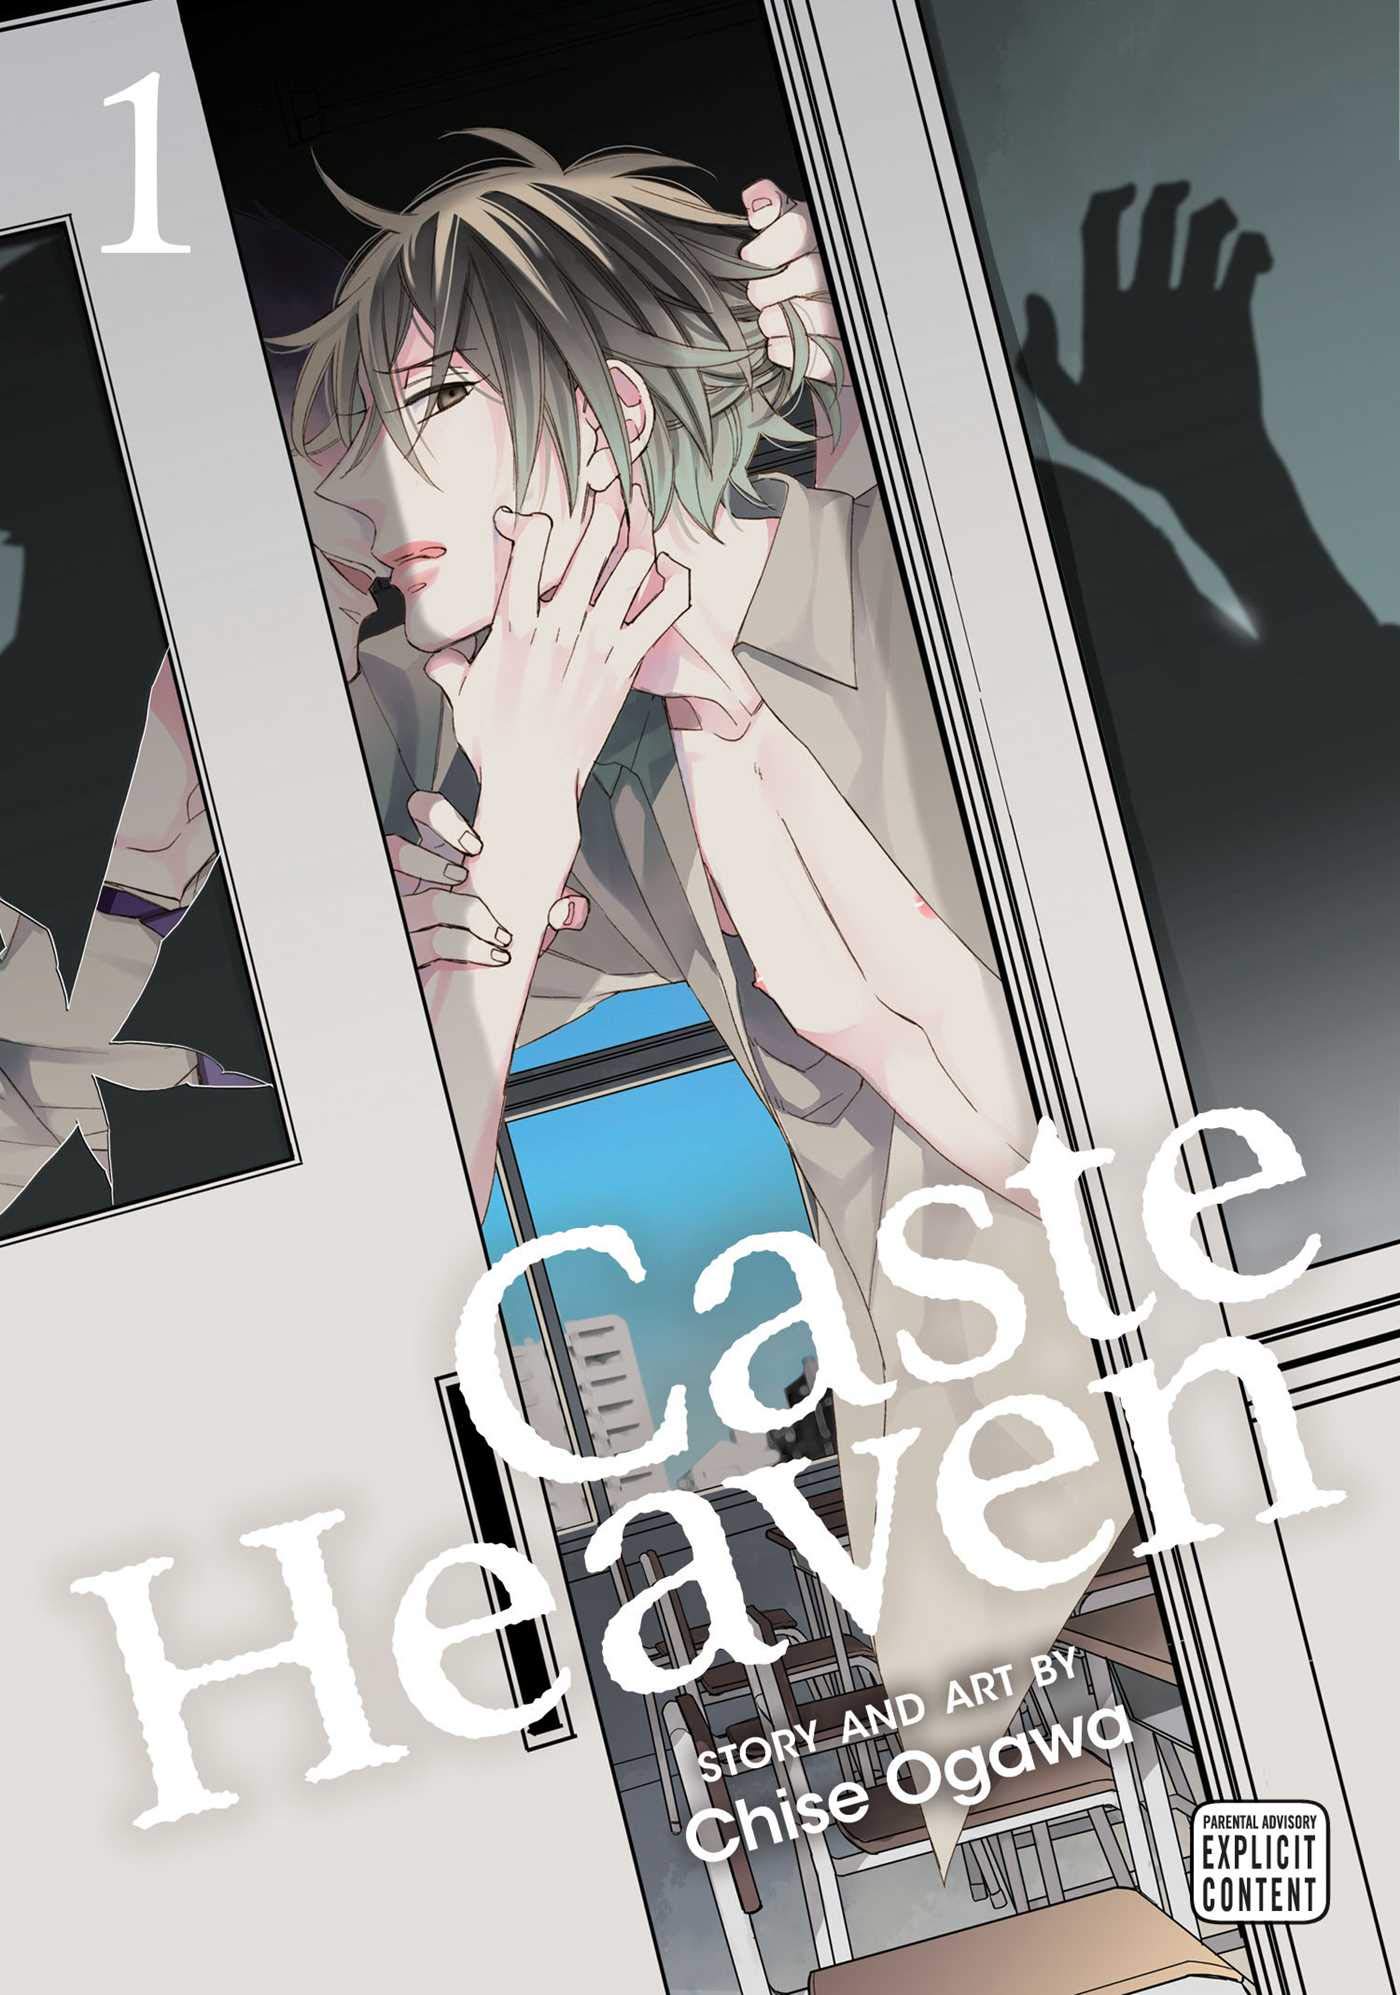 Caste Heaven - Volume 1 | Chise Ogawa